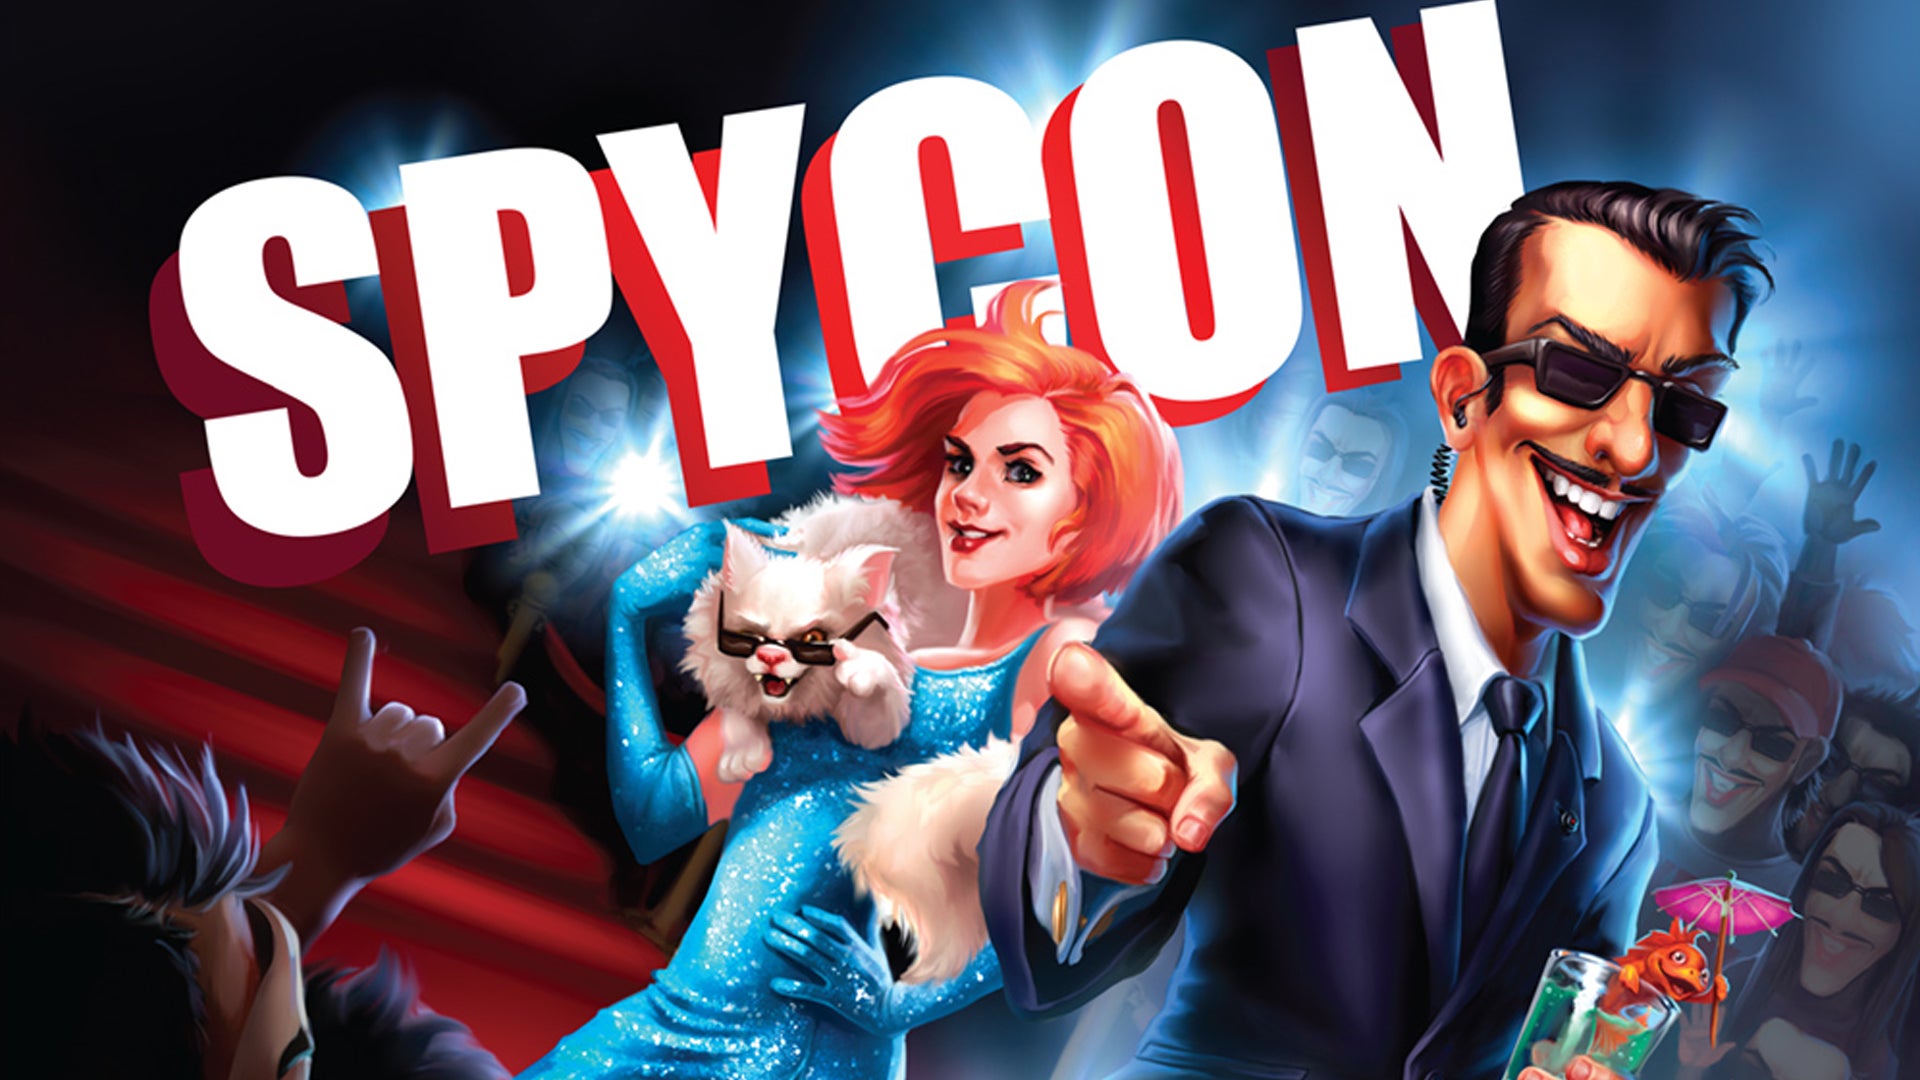 Spycon board game artwork